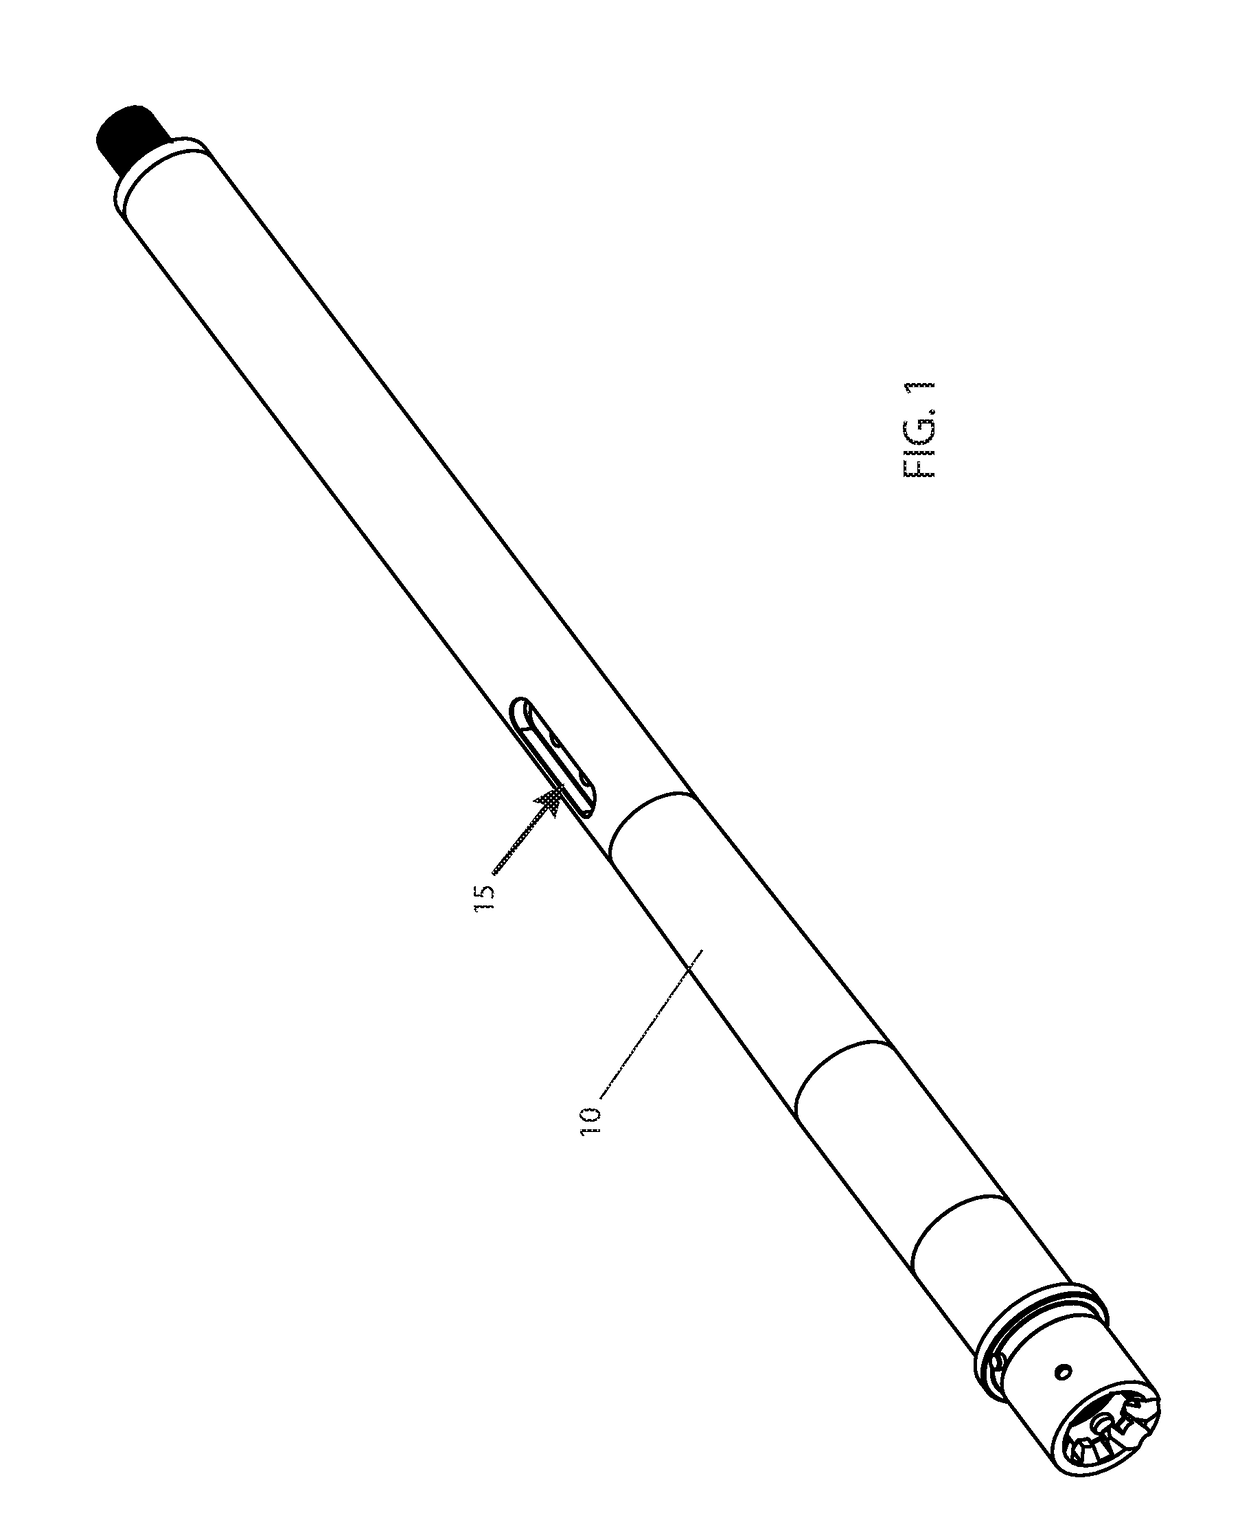 Non-segmented composite barrel for gas operated firearms